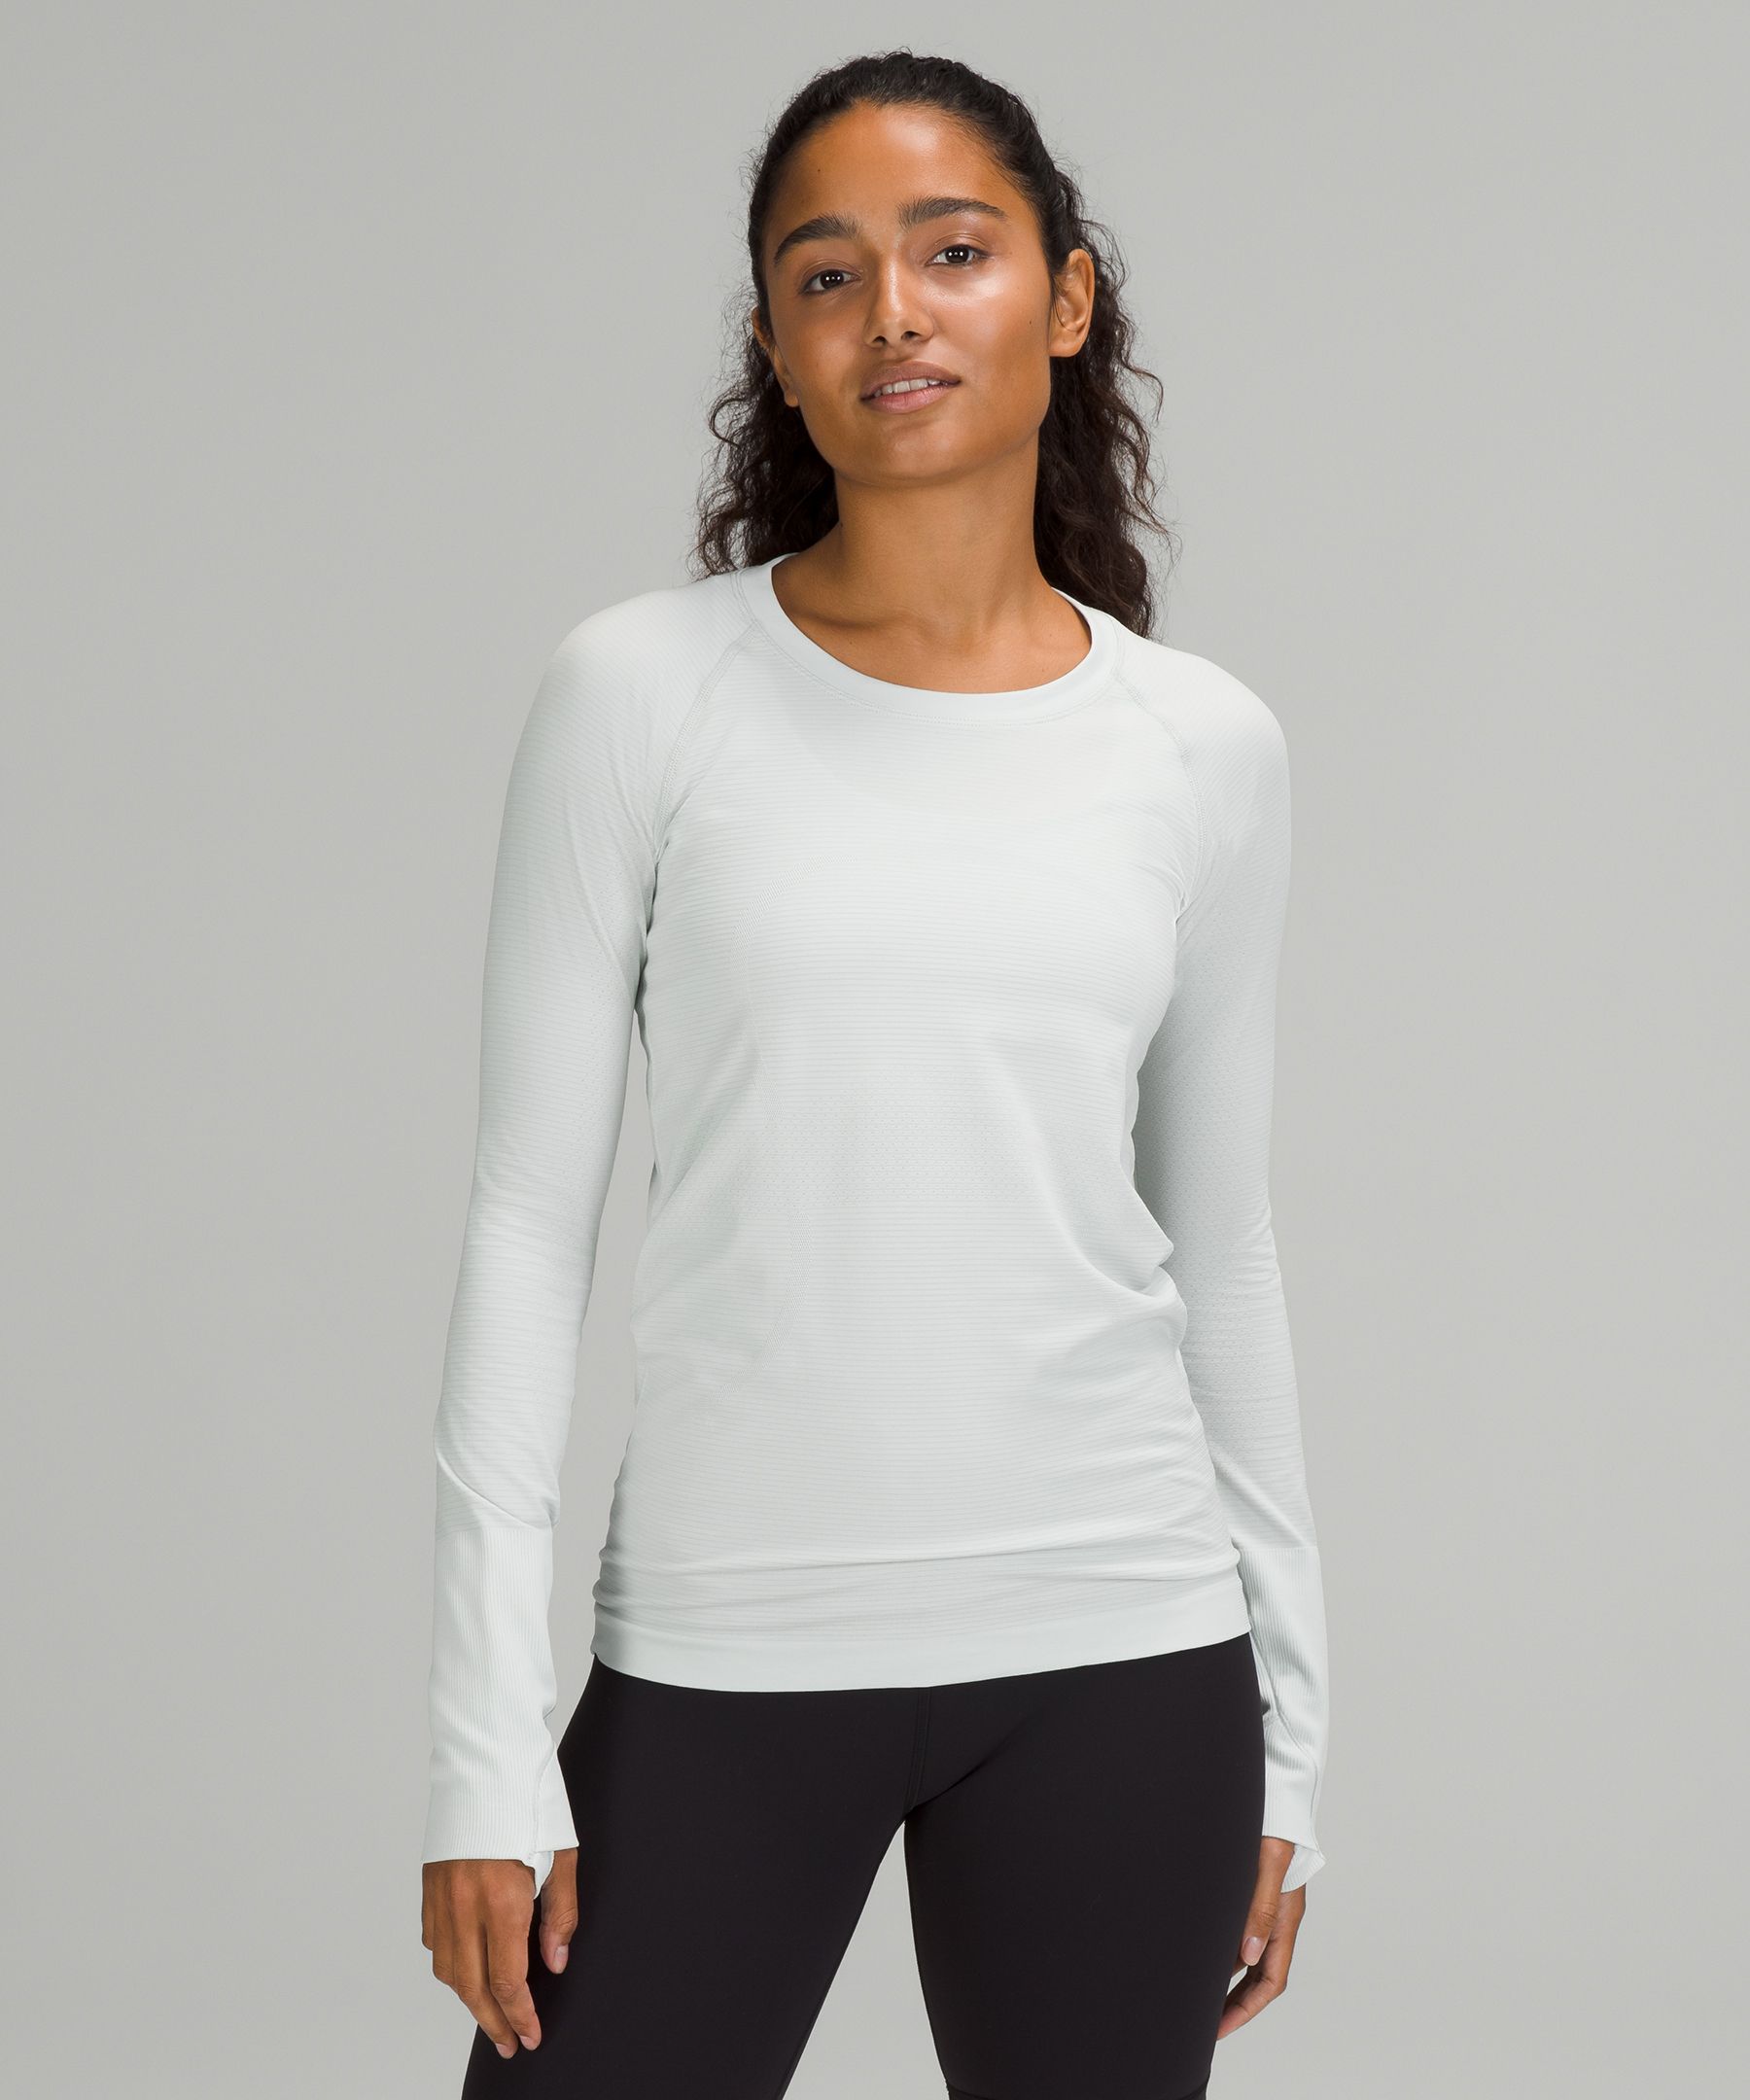 Lululemon Swiftly Tech Long Sleeve Shirt 2.0 In White